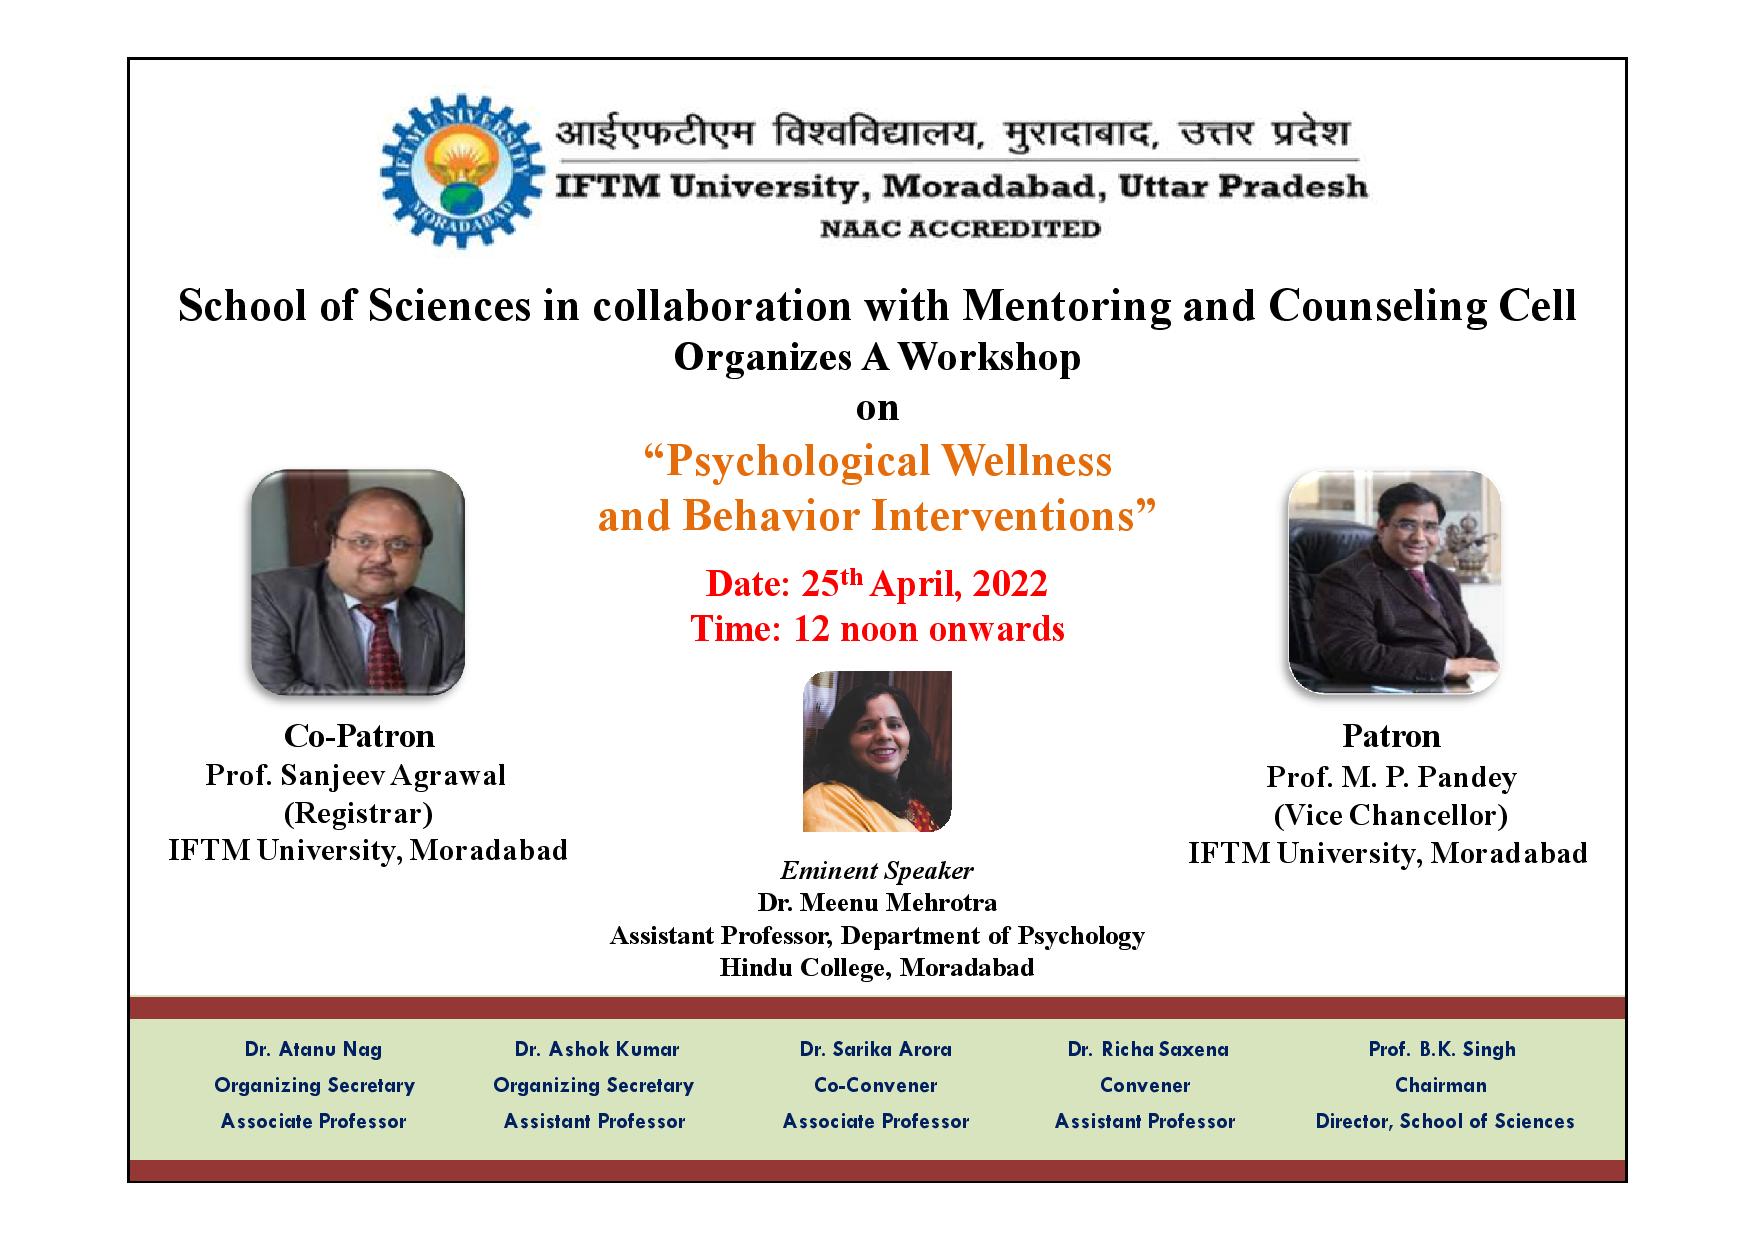 A Workshop on Psychological Wellness and Behavior Interventions